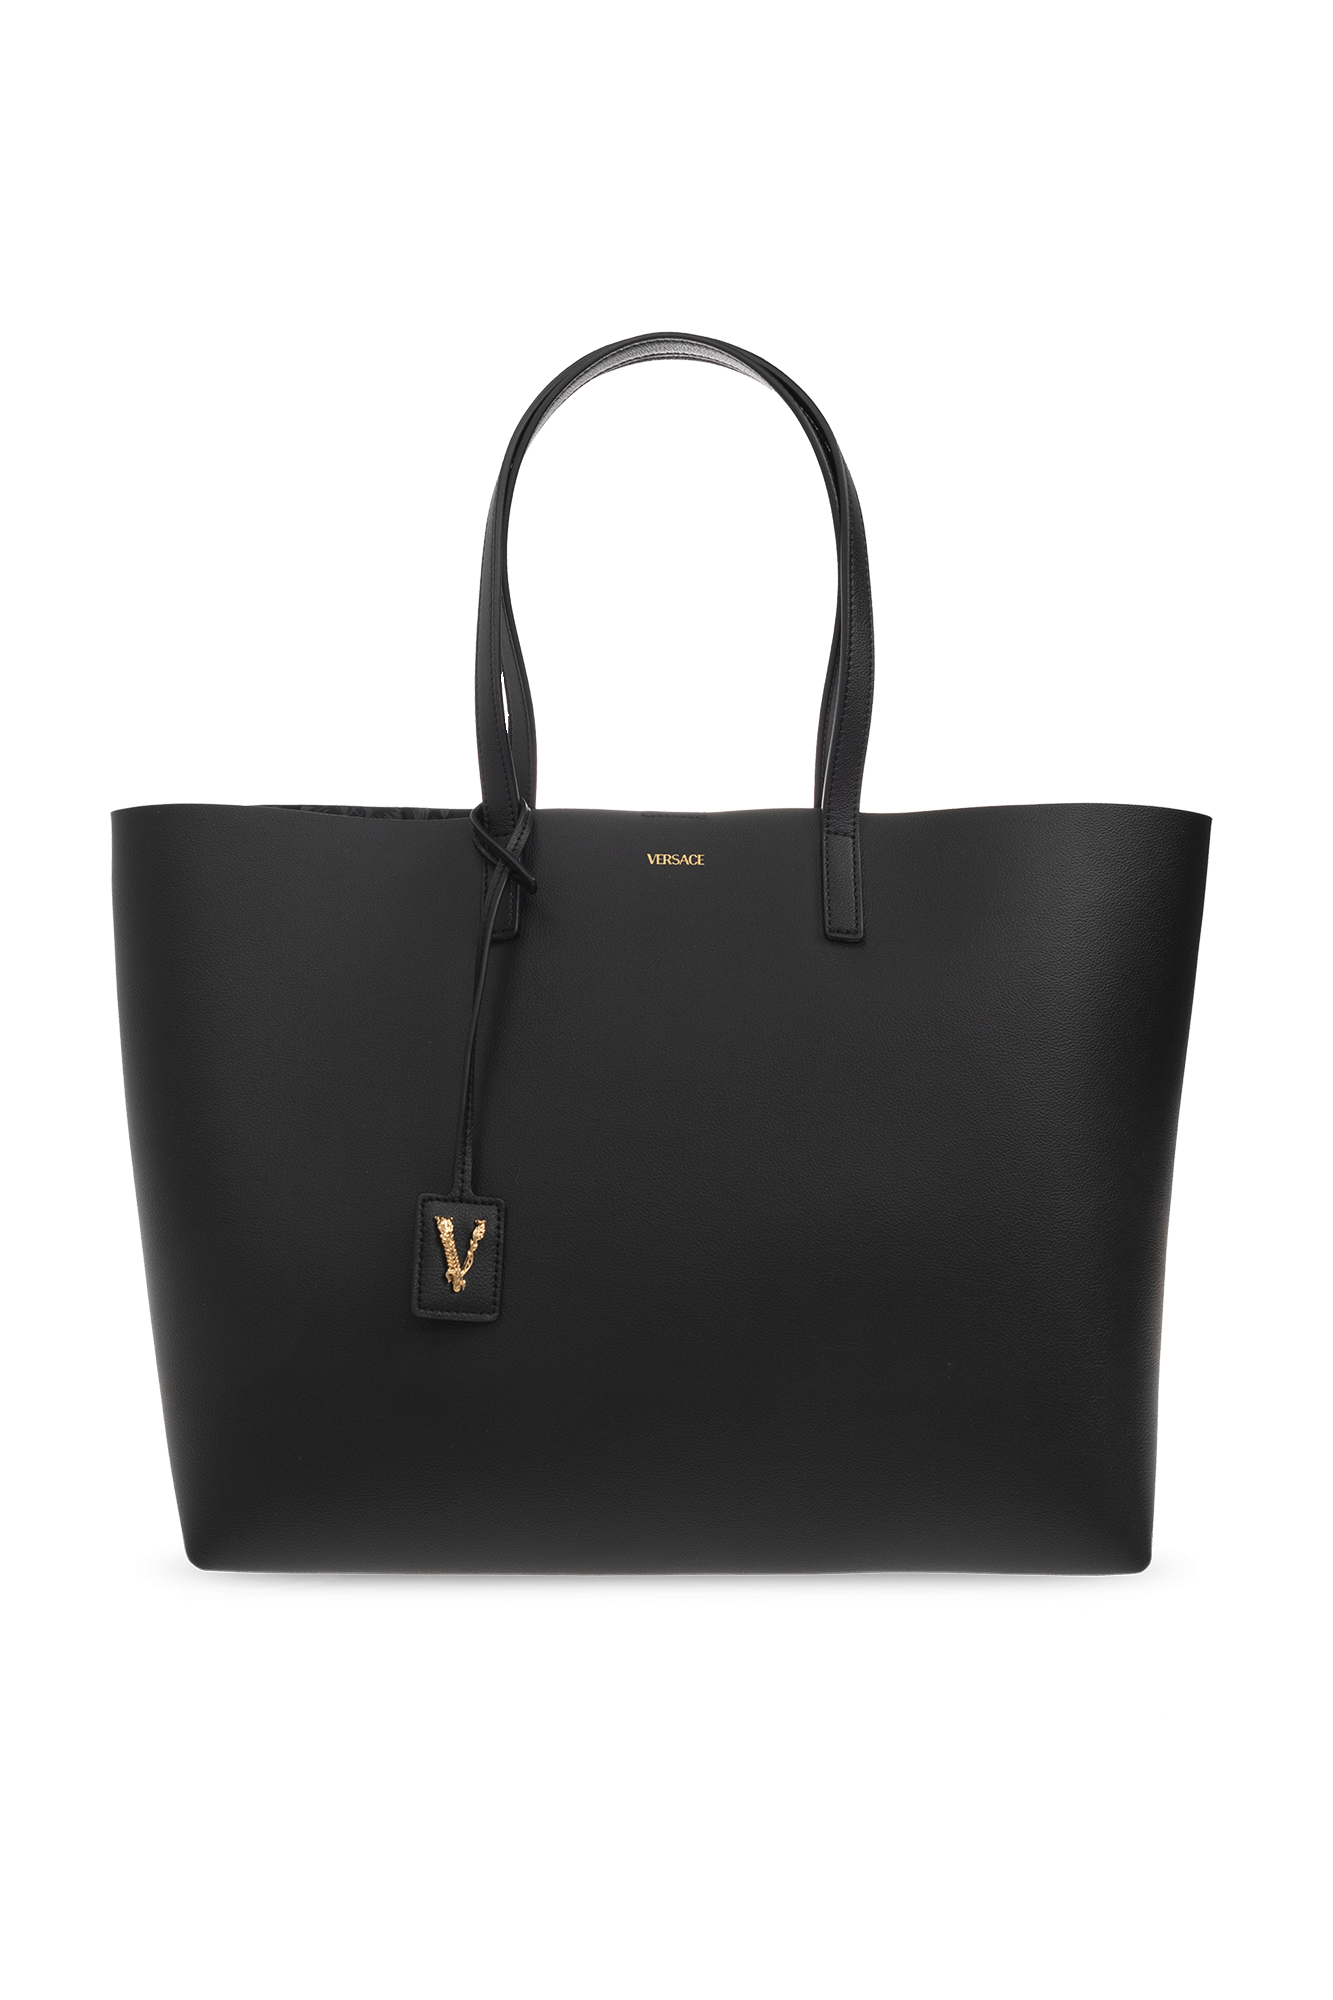 Versace ‘Virtus’ shopper The bag